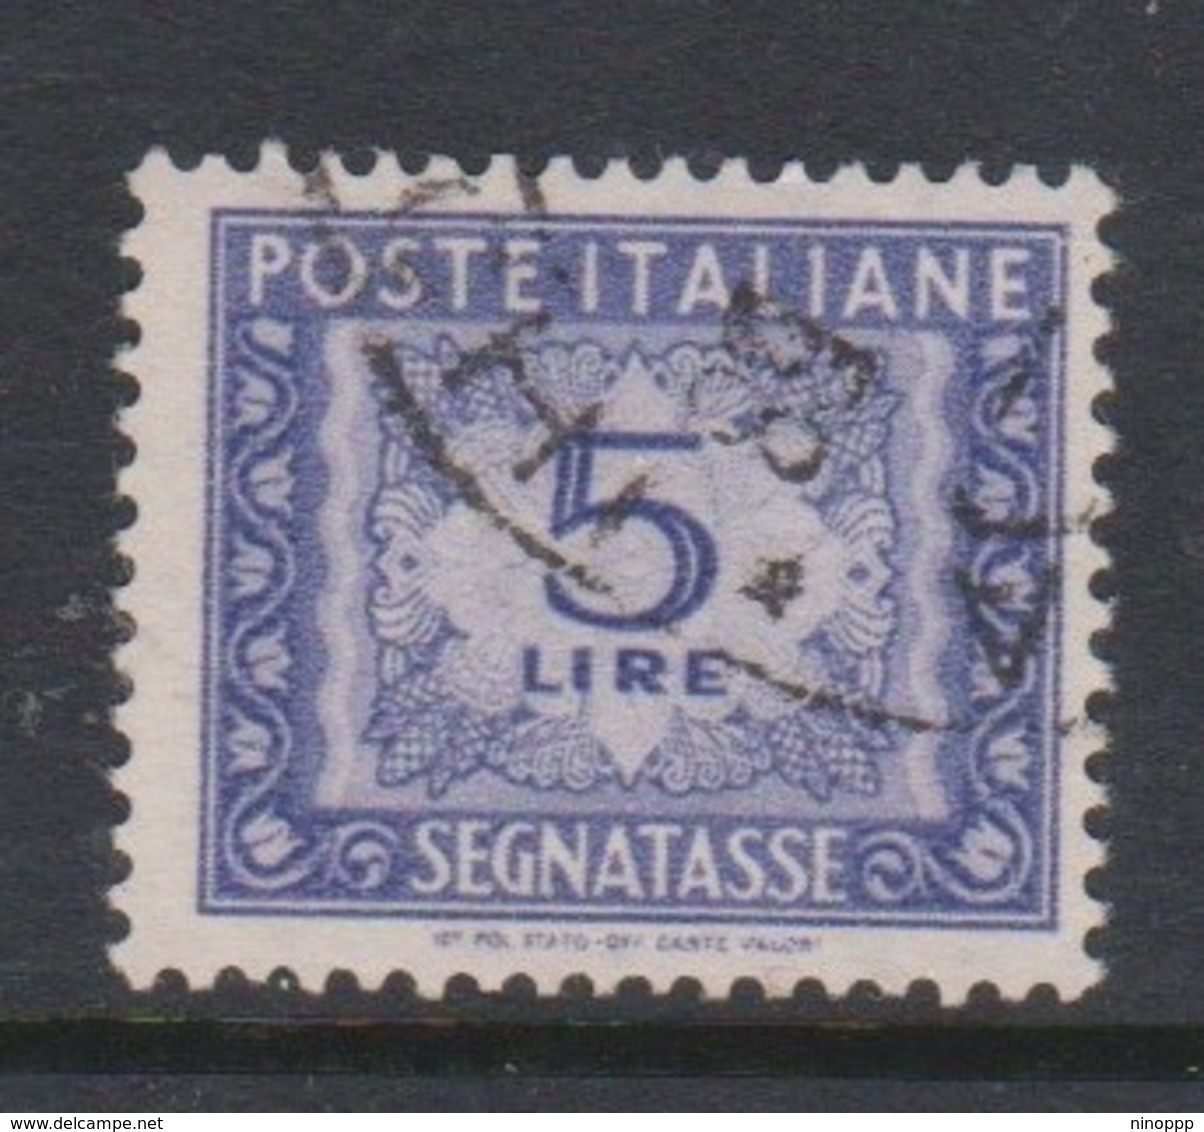 Italy PD 101 1947-54 Republic  Postage Due,watermark Flying Wheel,lire 5 Blue,used - Segnatasse